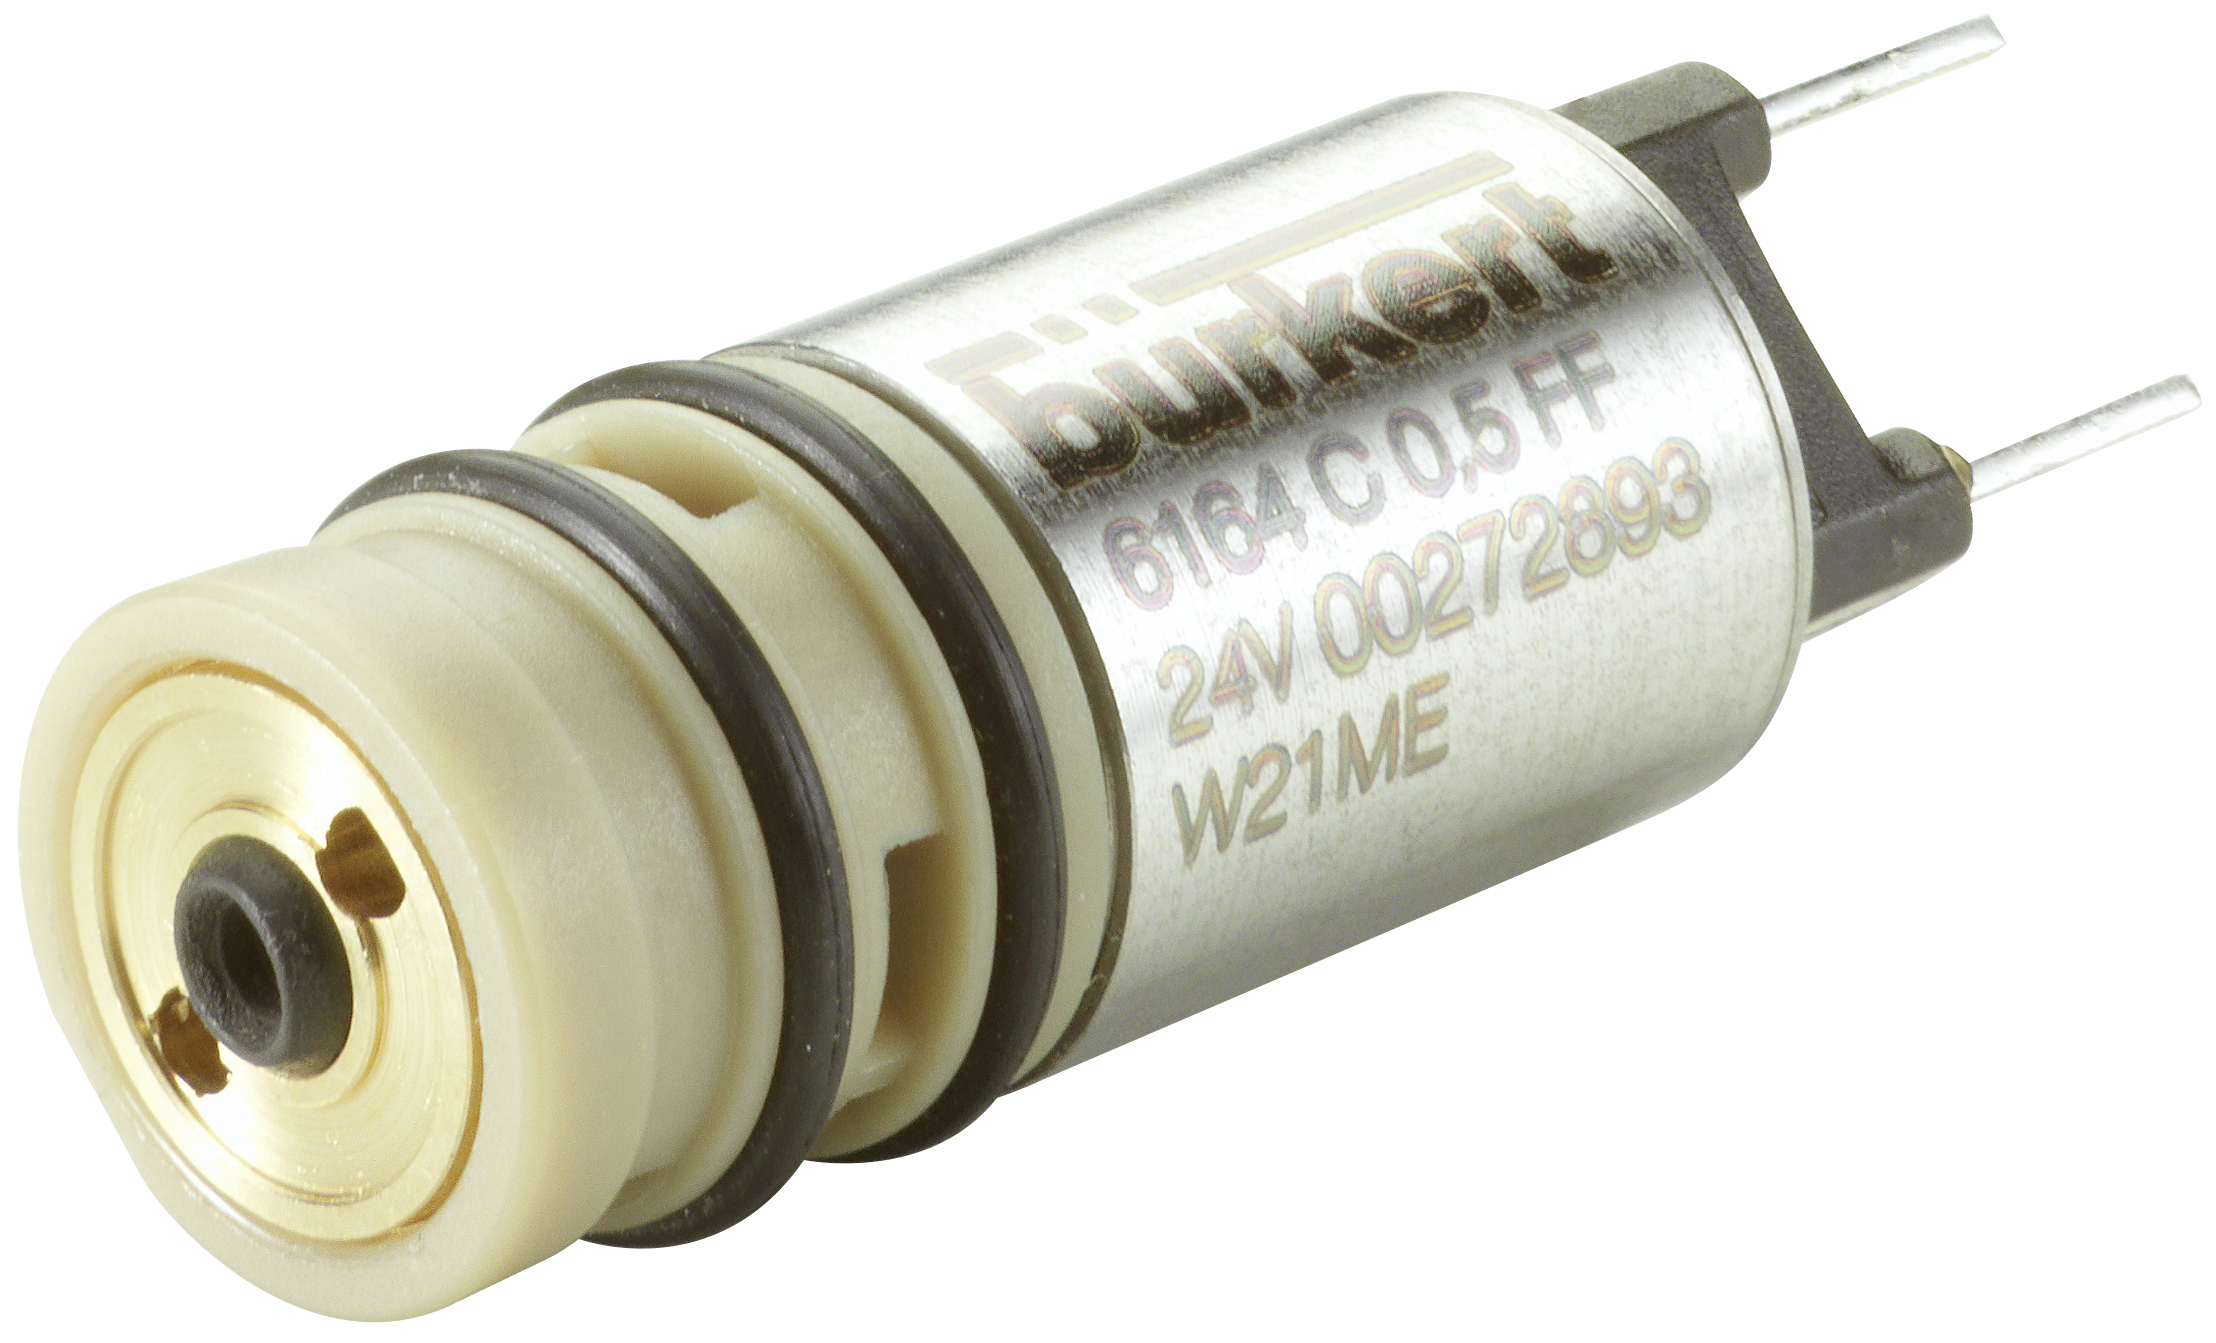 Tipo 6164 - 3/2-way pneumatic cartridge solenoid valve